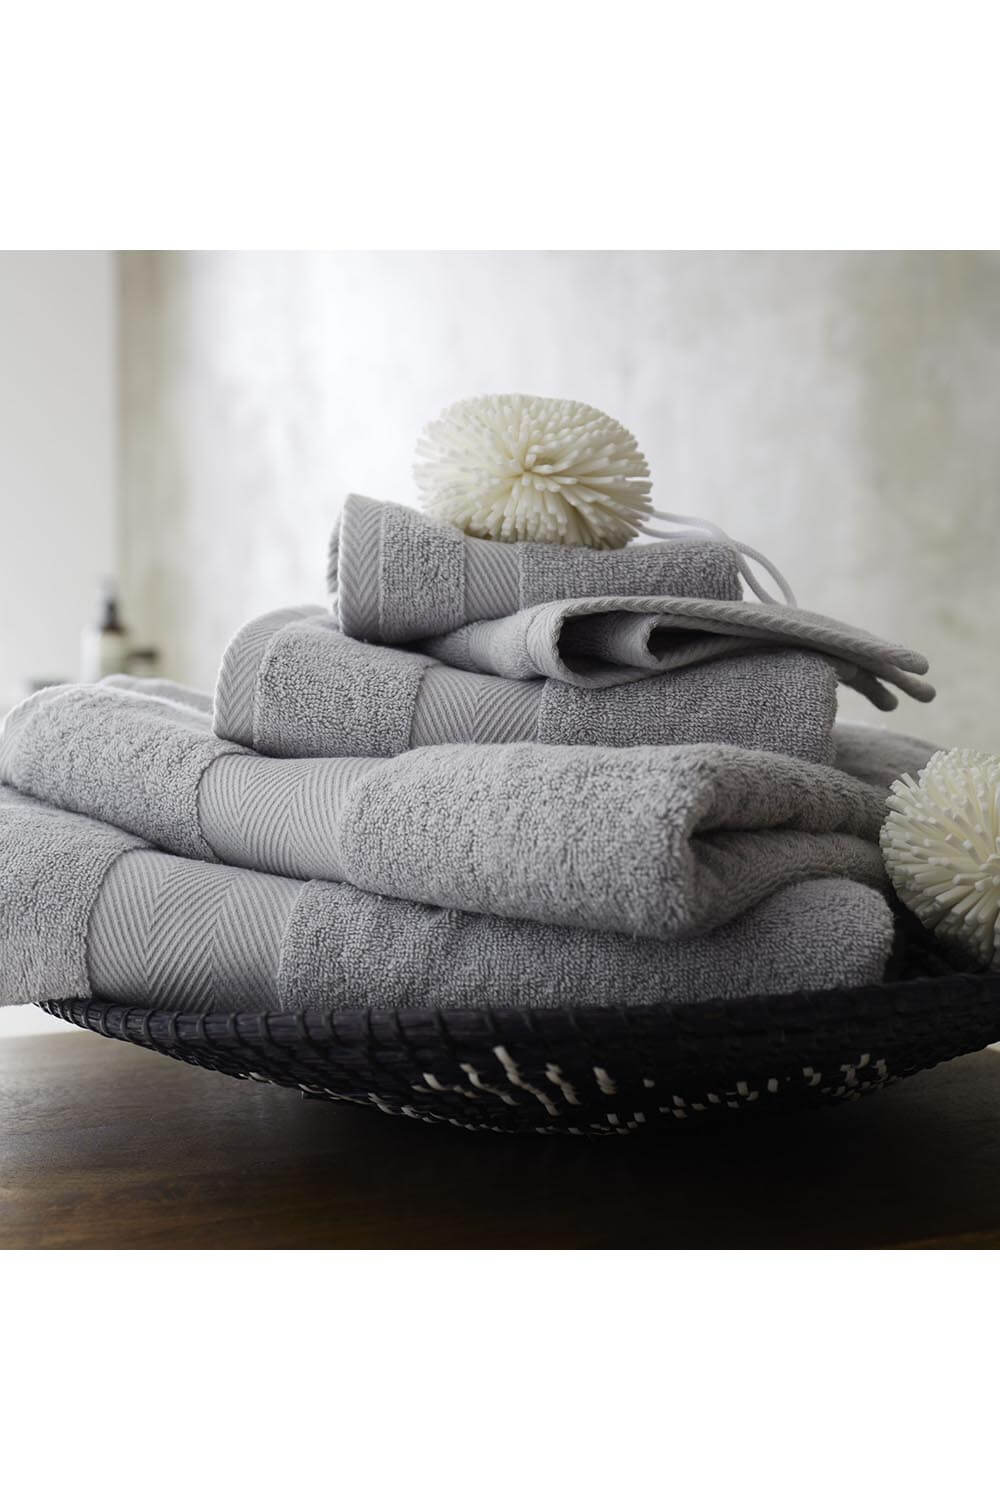 Bianca Silk Hand Towel 50cm x 90cm - Dove Grey 2 Shaws Department Stores